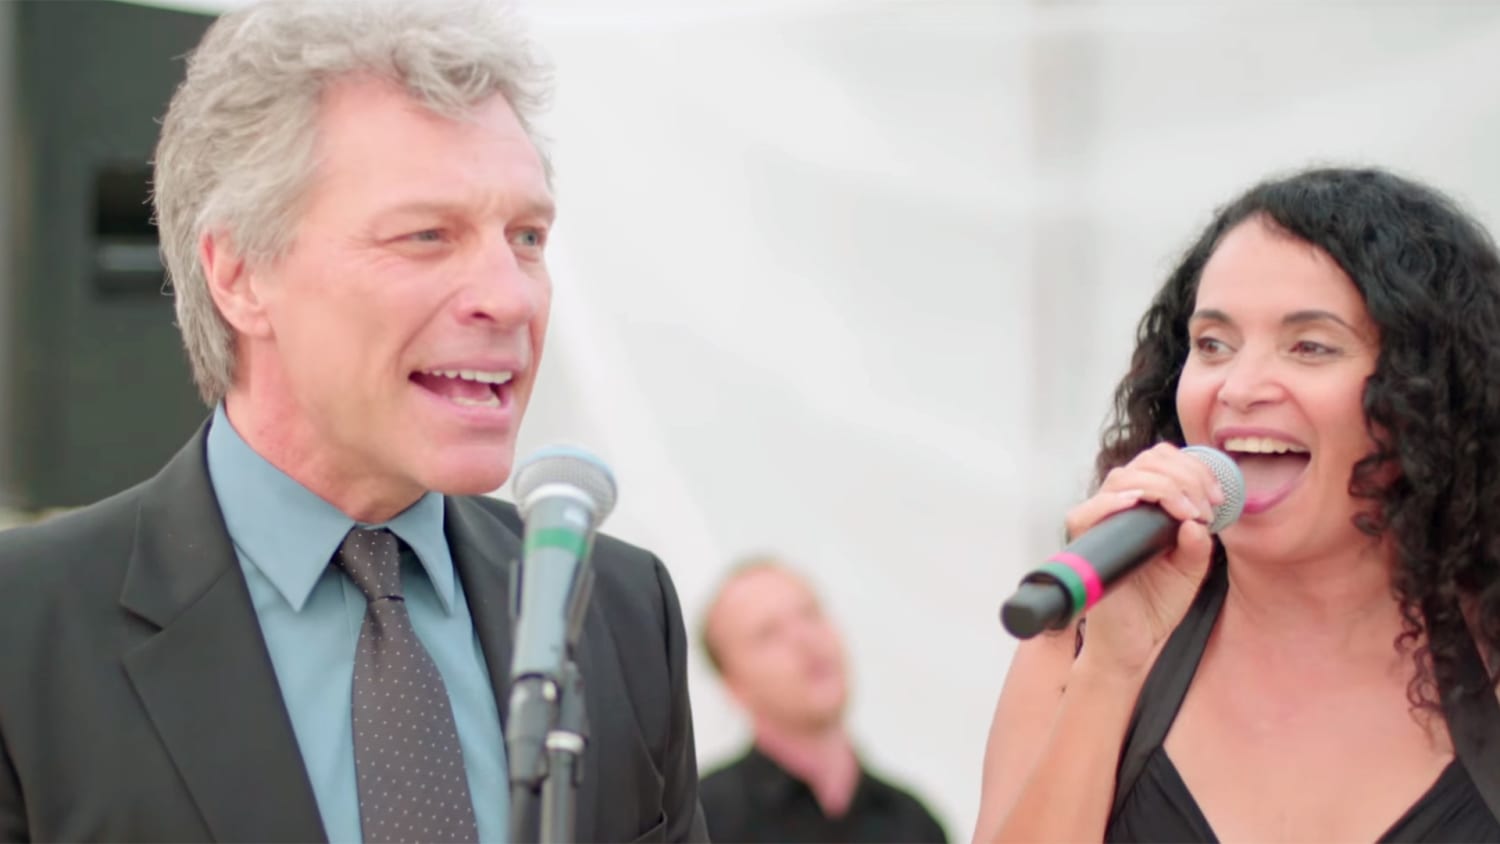 The wedding singer! Jon Bon Jovi (reluctantly) performs 'Livin' on a